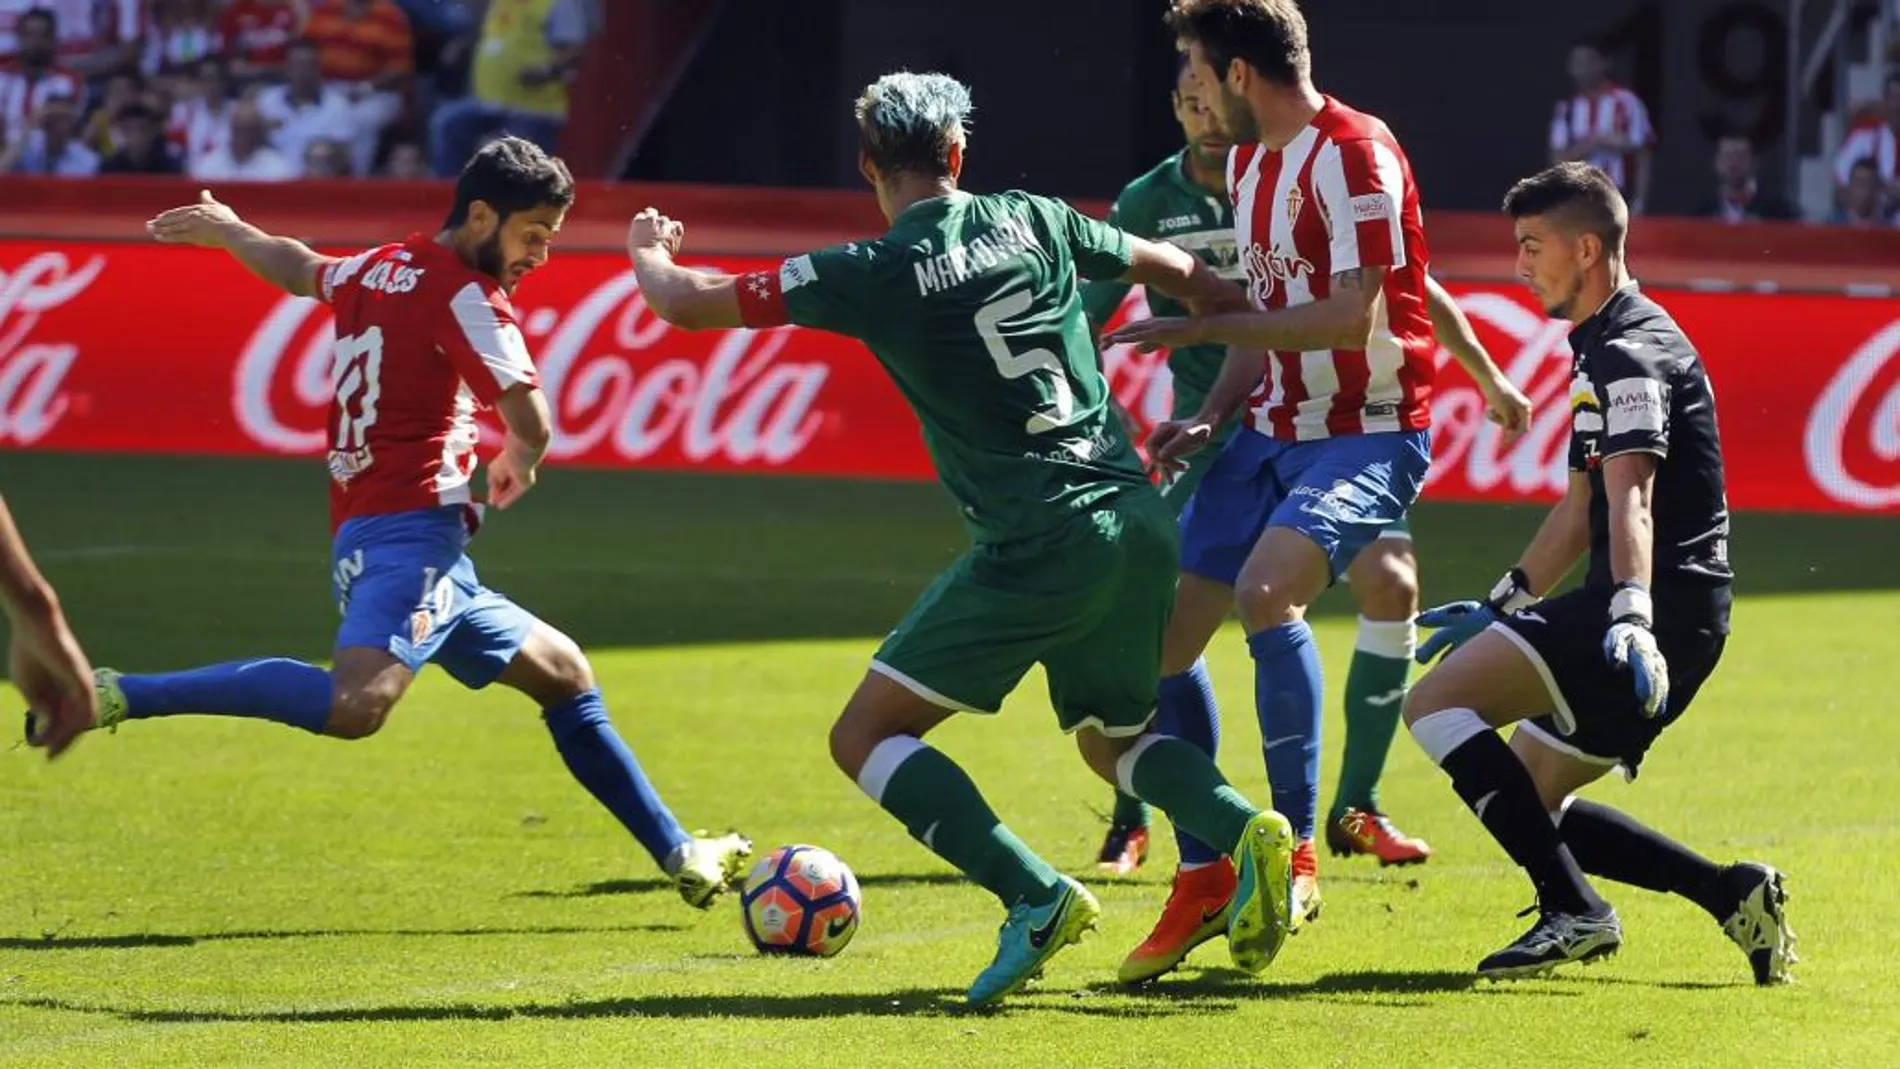 El centrocampista del Sporting Nacho Cases dispara a puerta para anotar el primer gol ante el Leganés